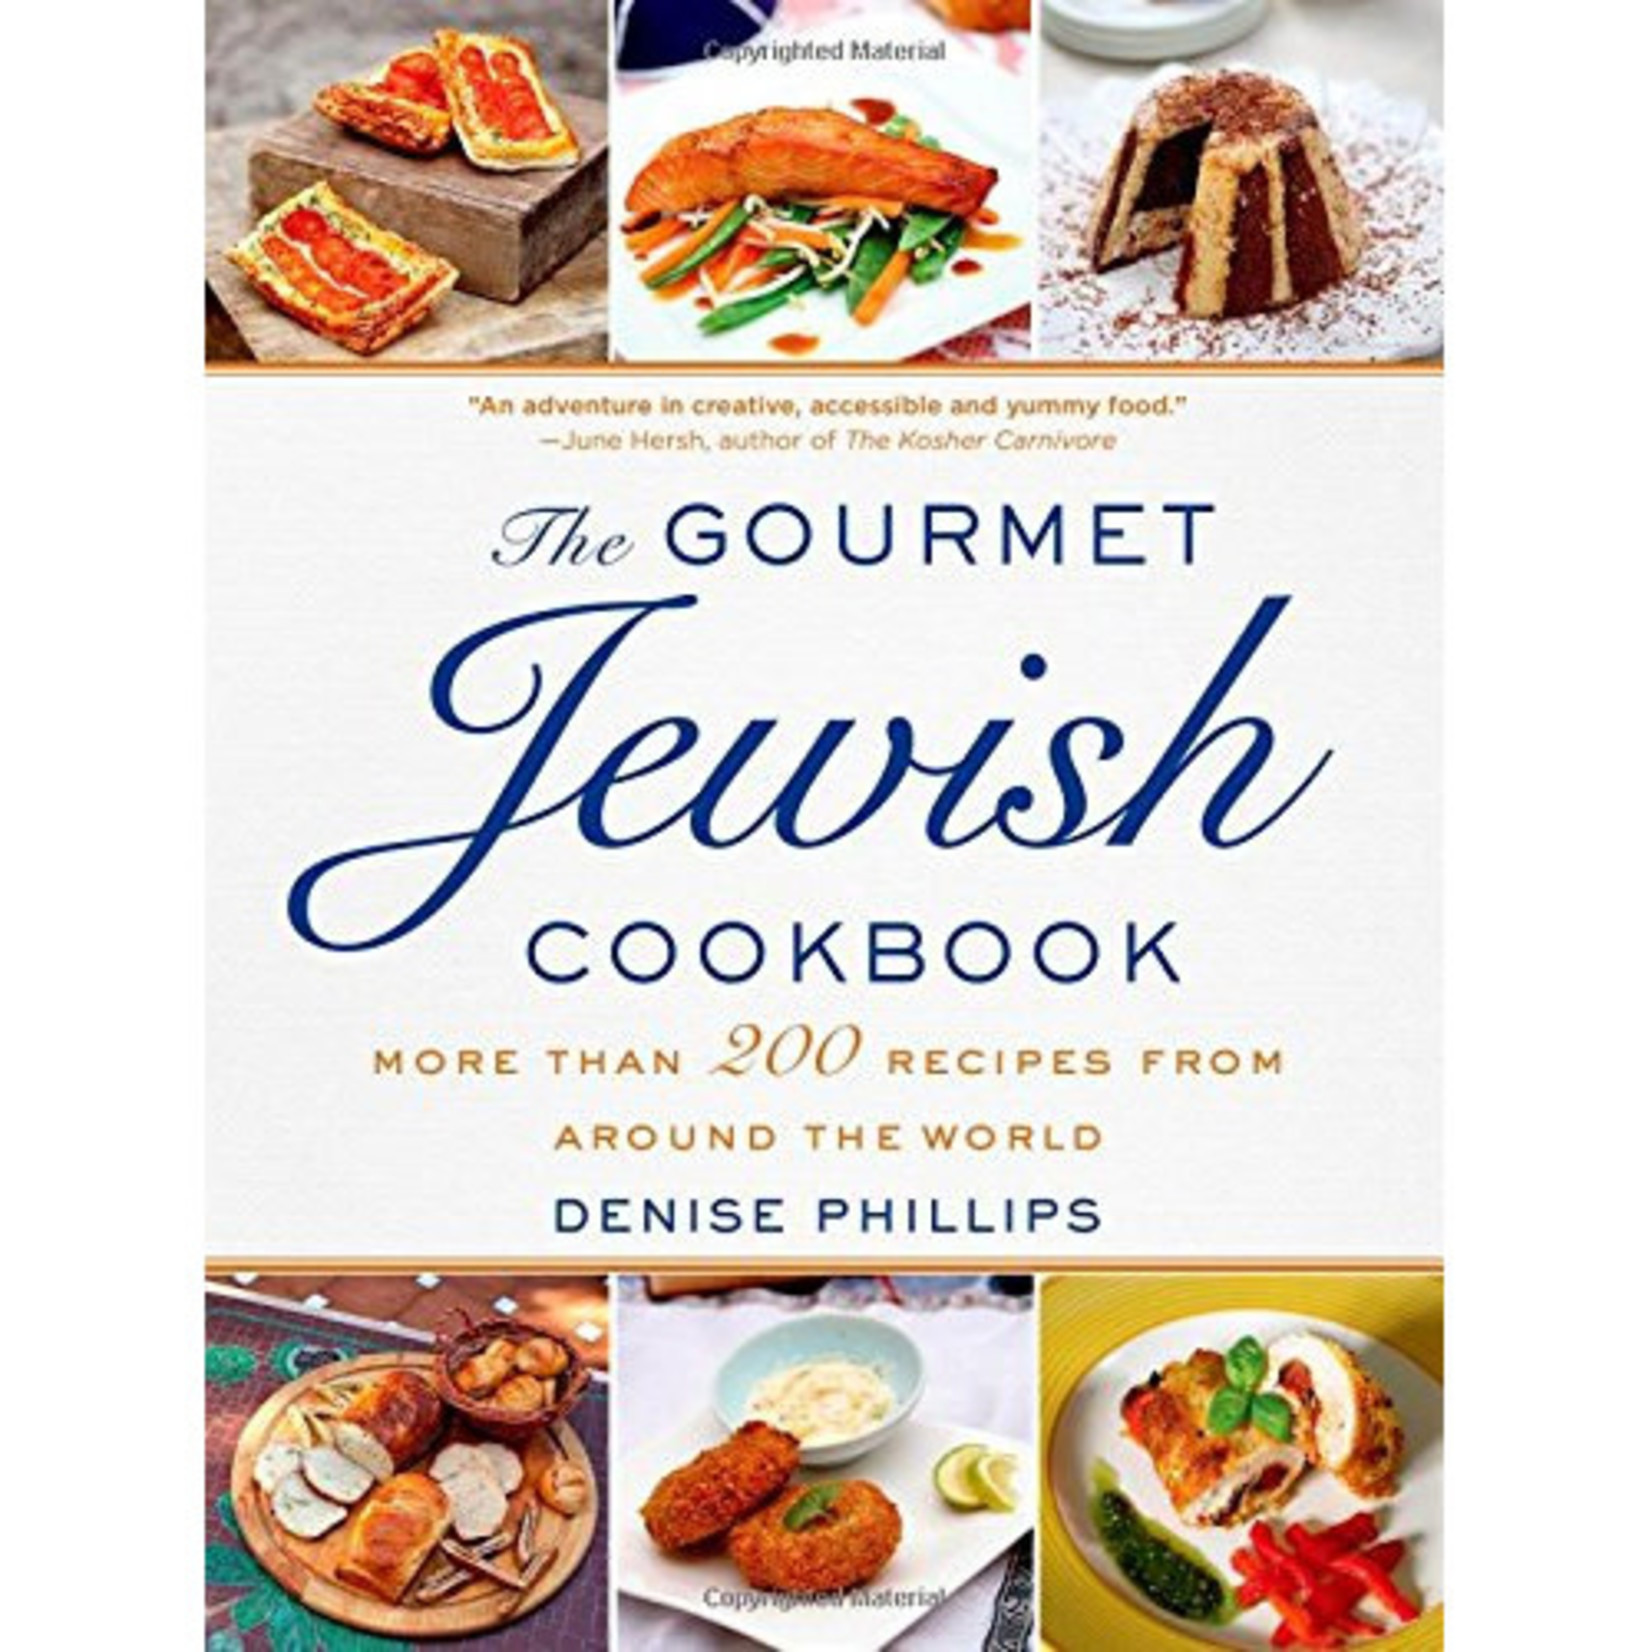 The Gourmet Jewish Cookbook